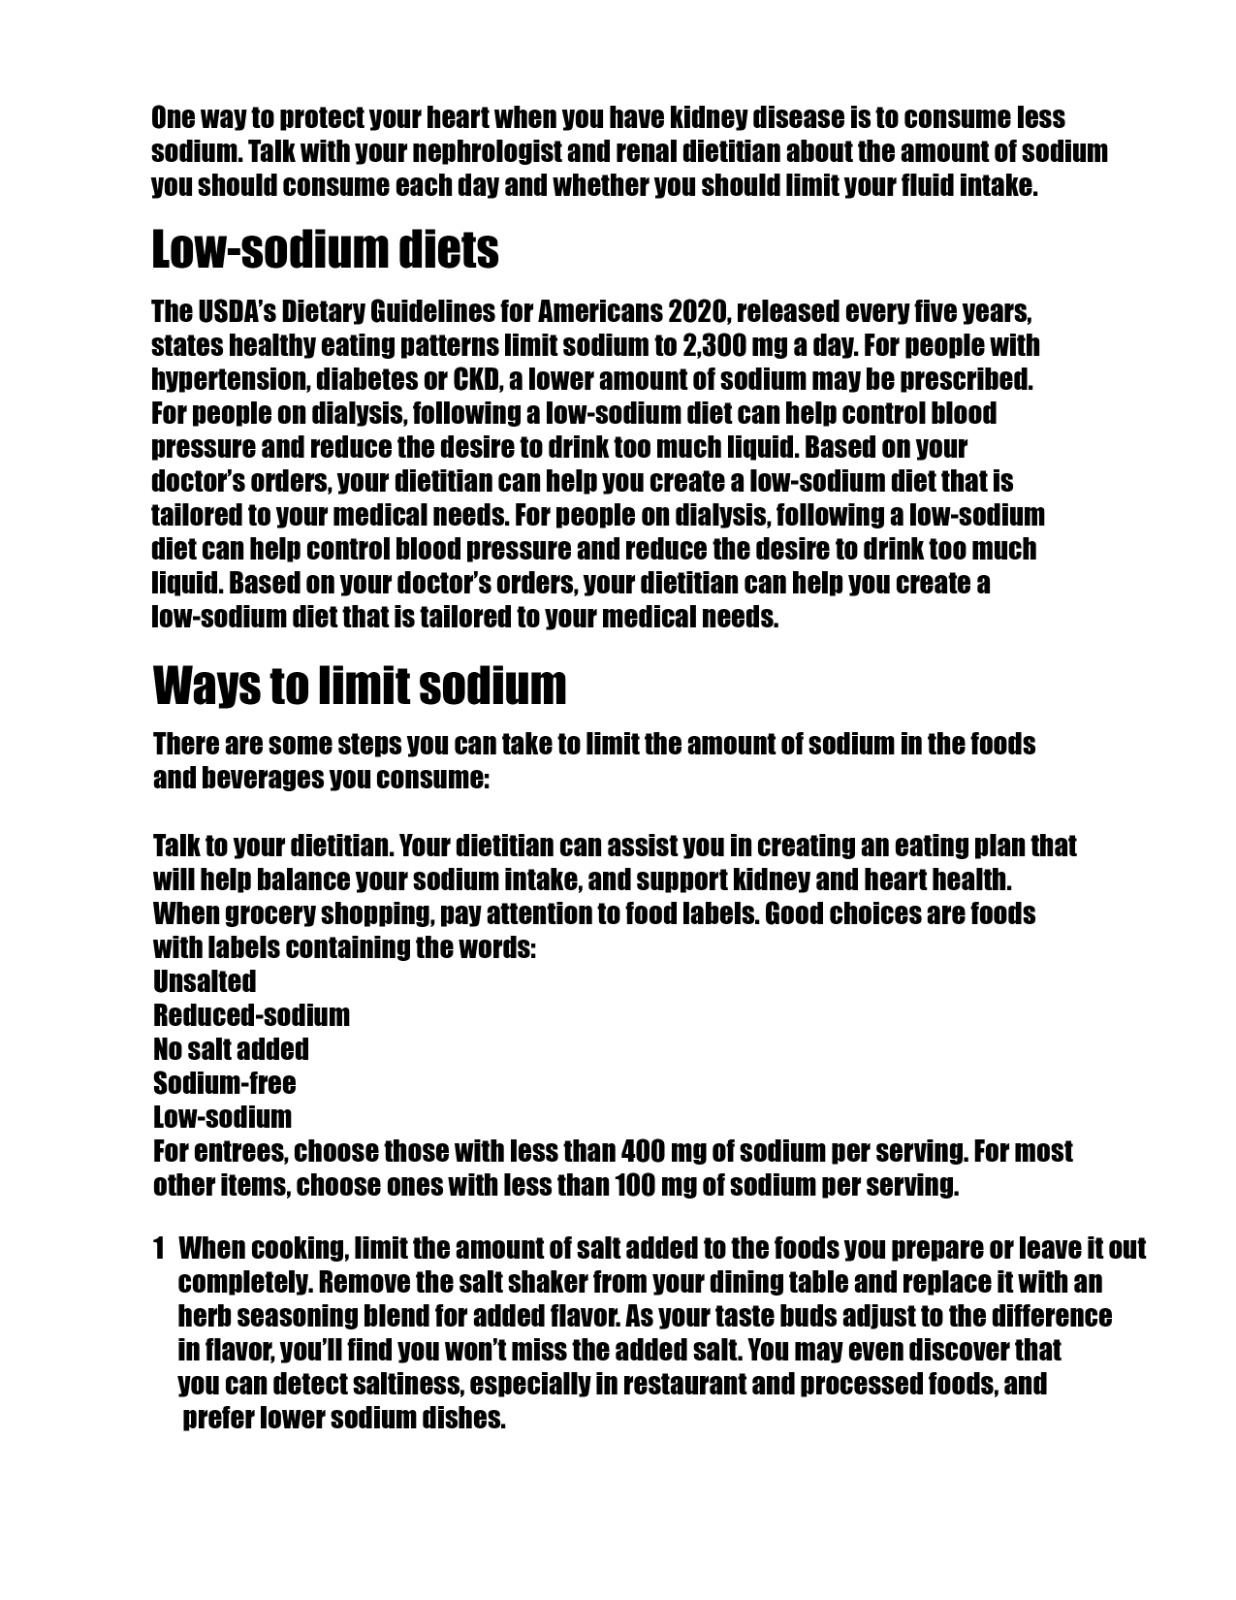 Sodium & Kidney Health